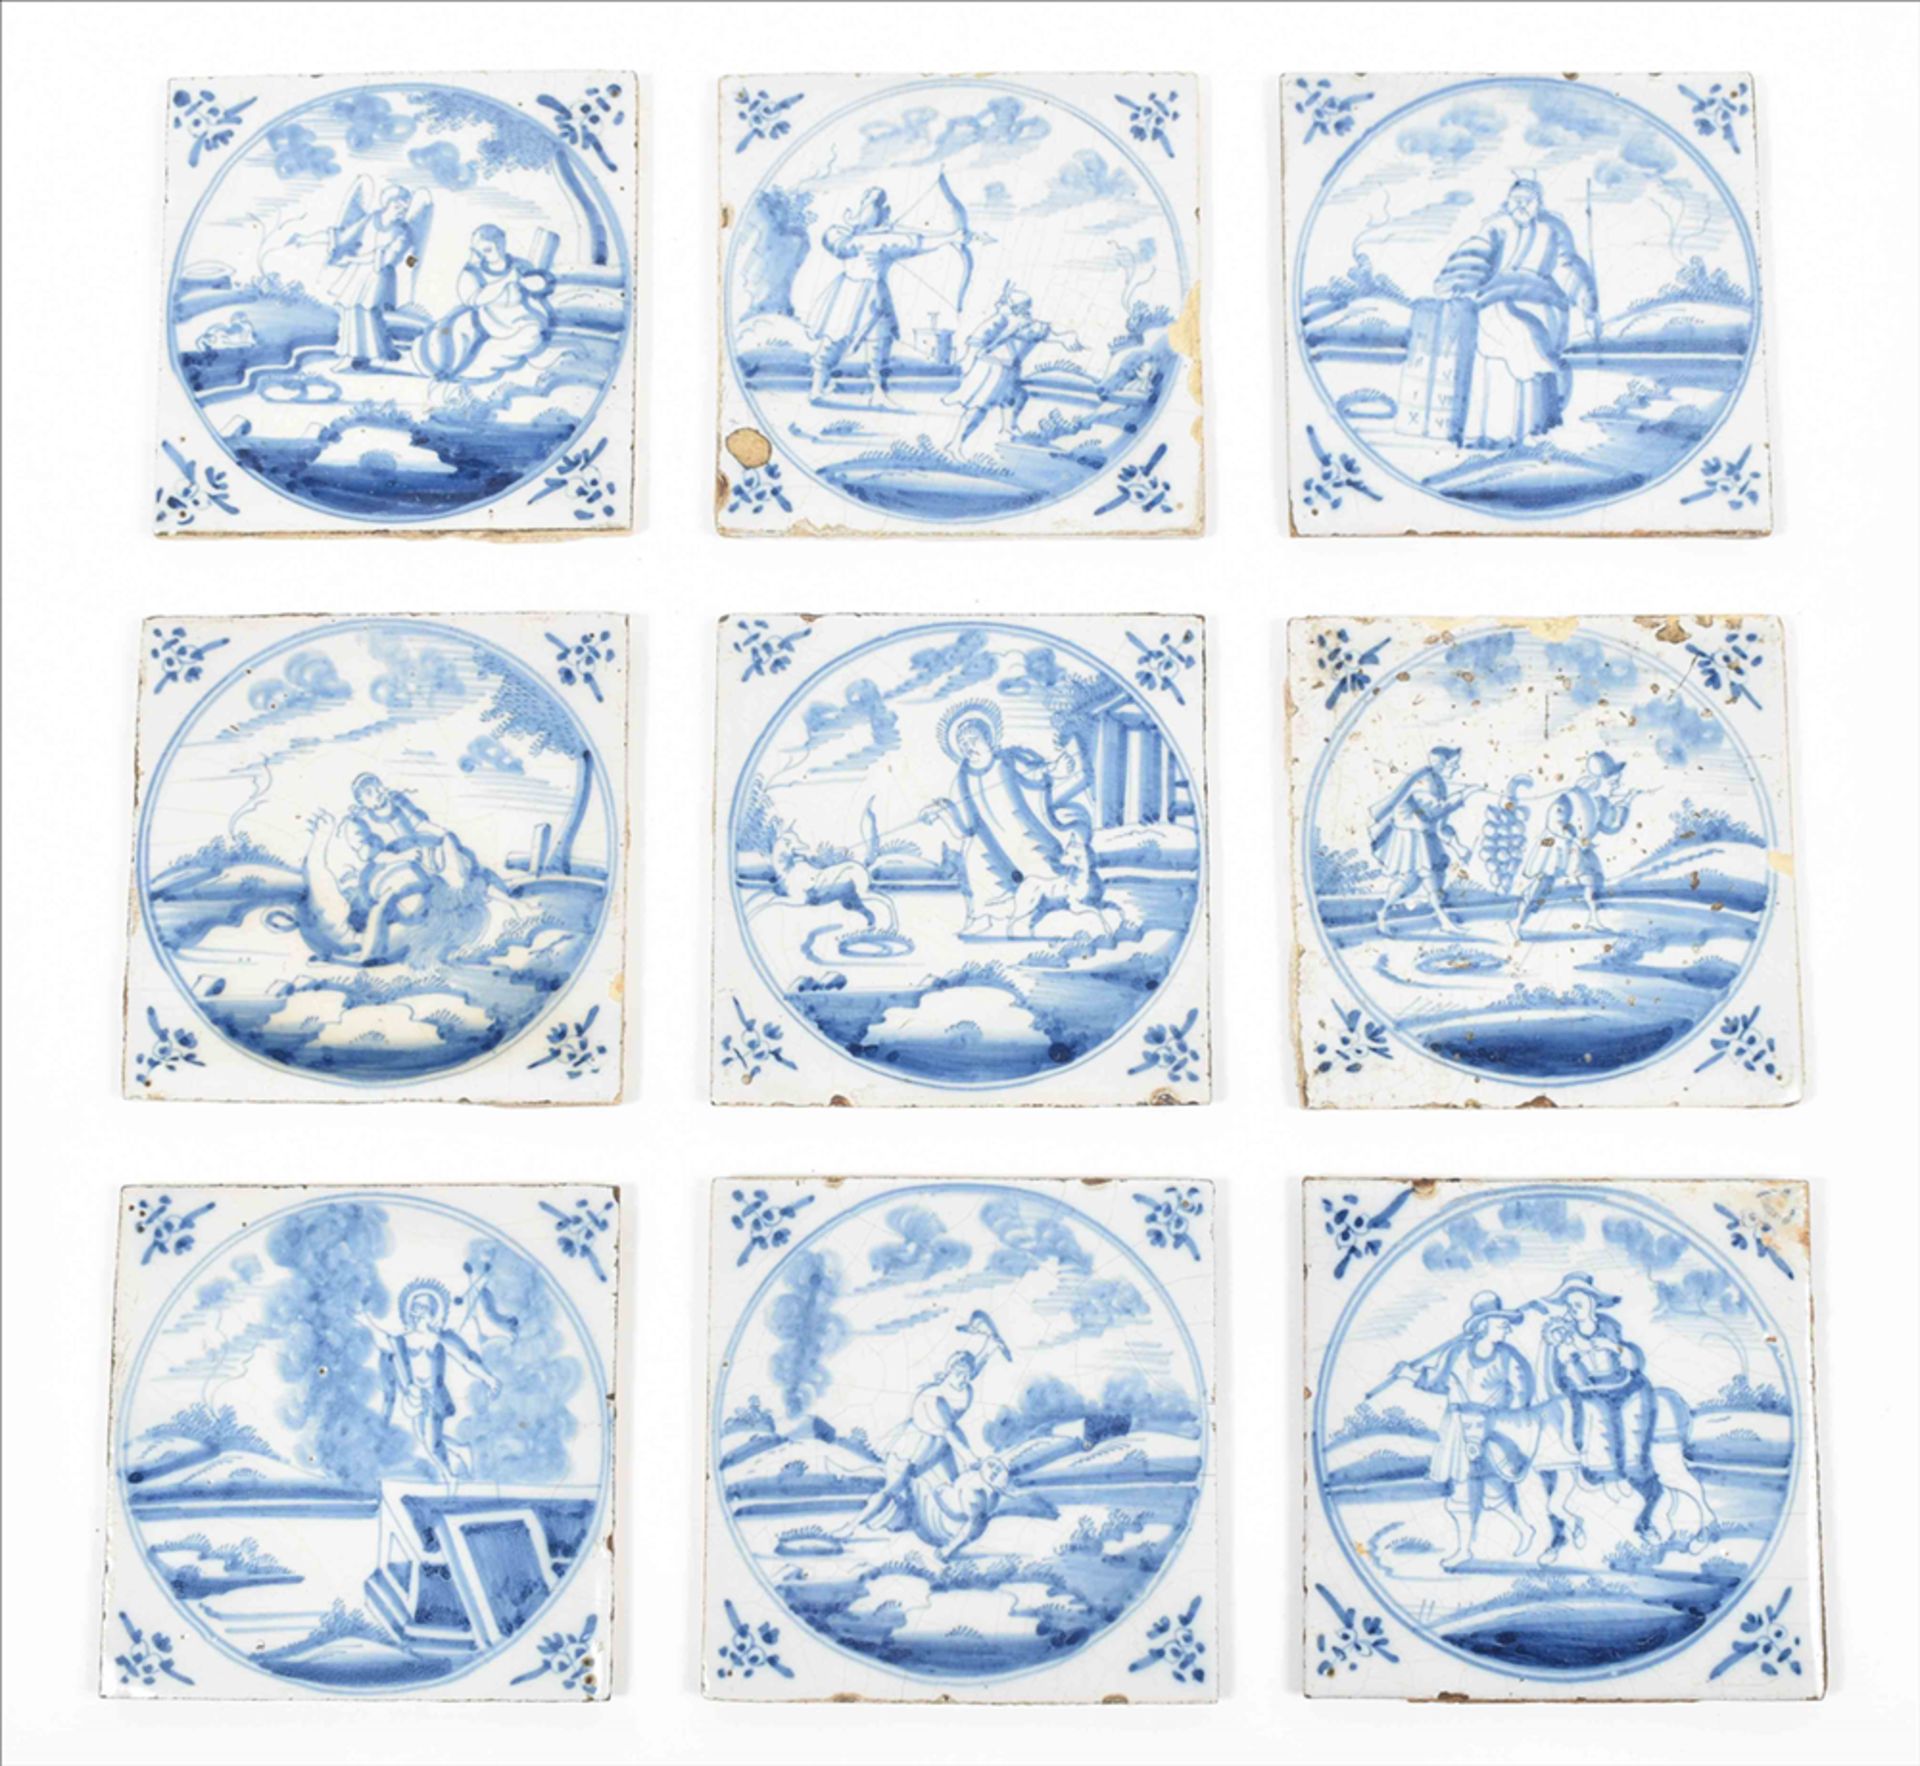 Nine Dutch tiles with biblical scenes